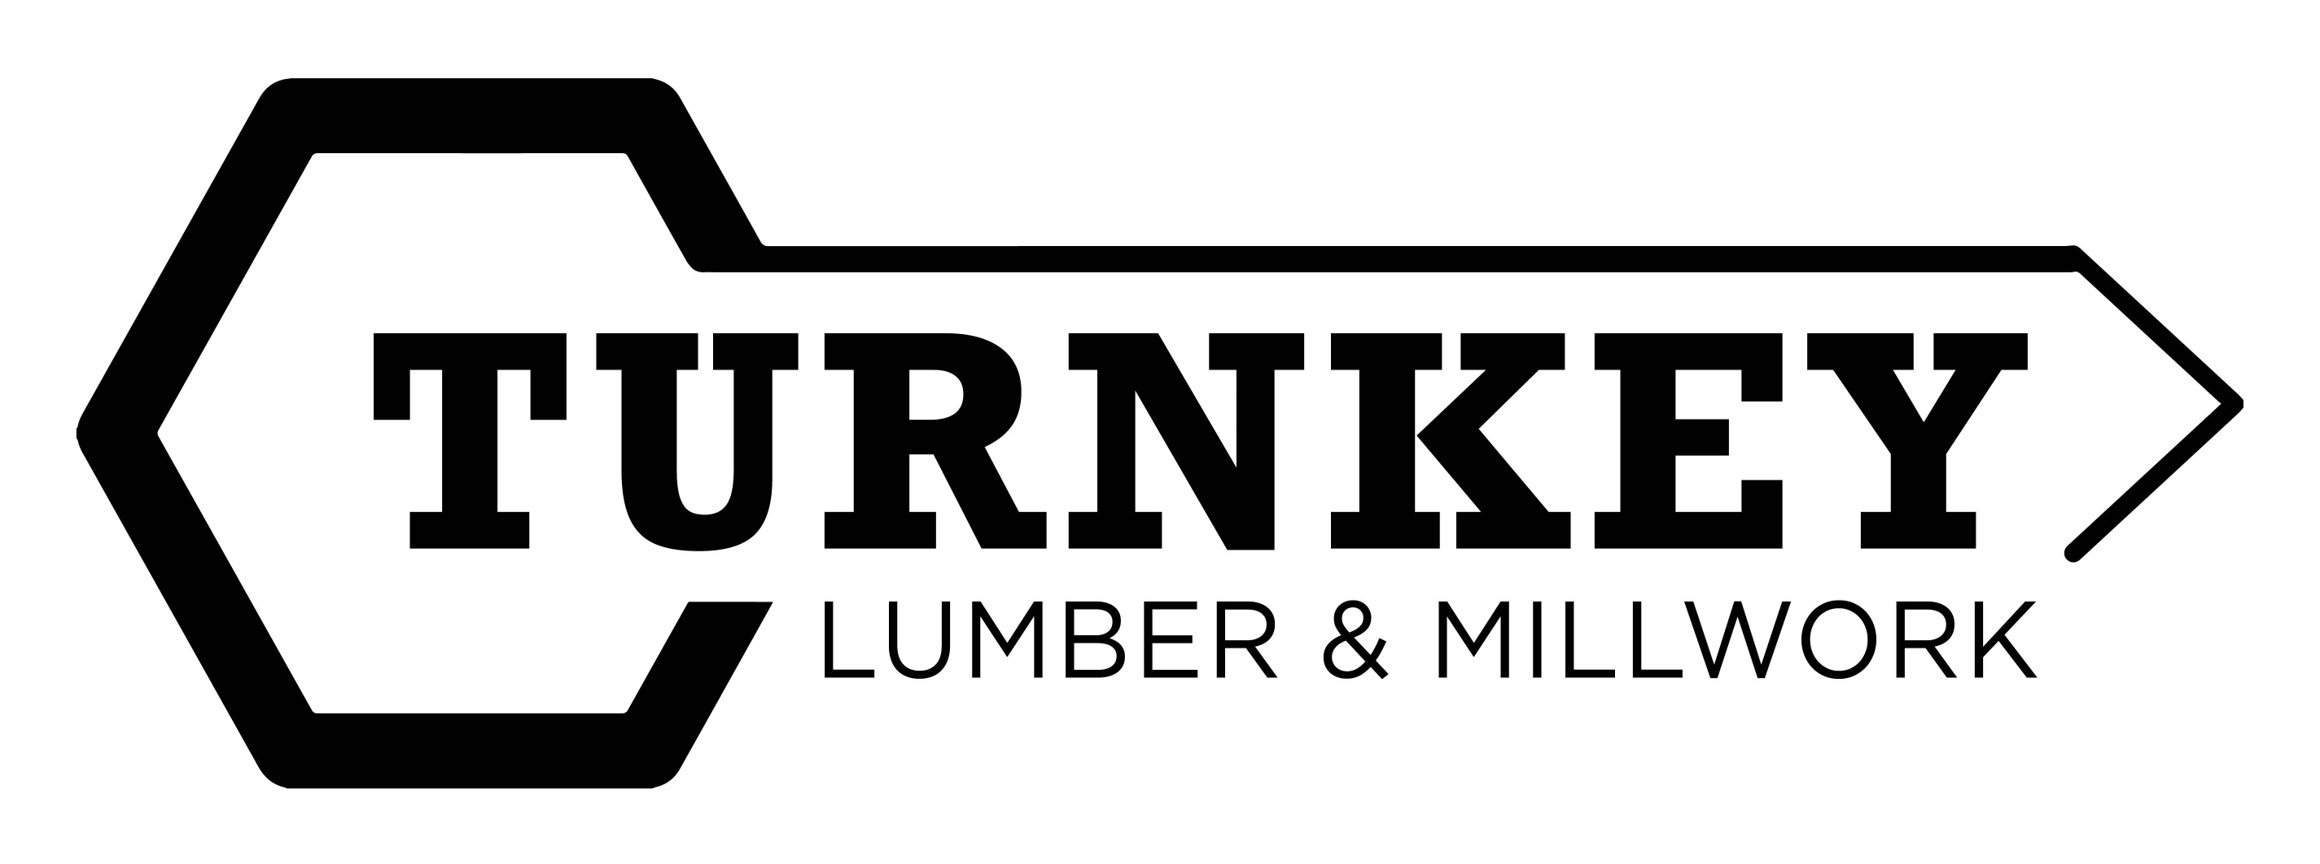 Turnkey Lumber & Millwork